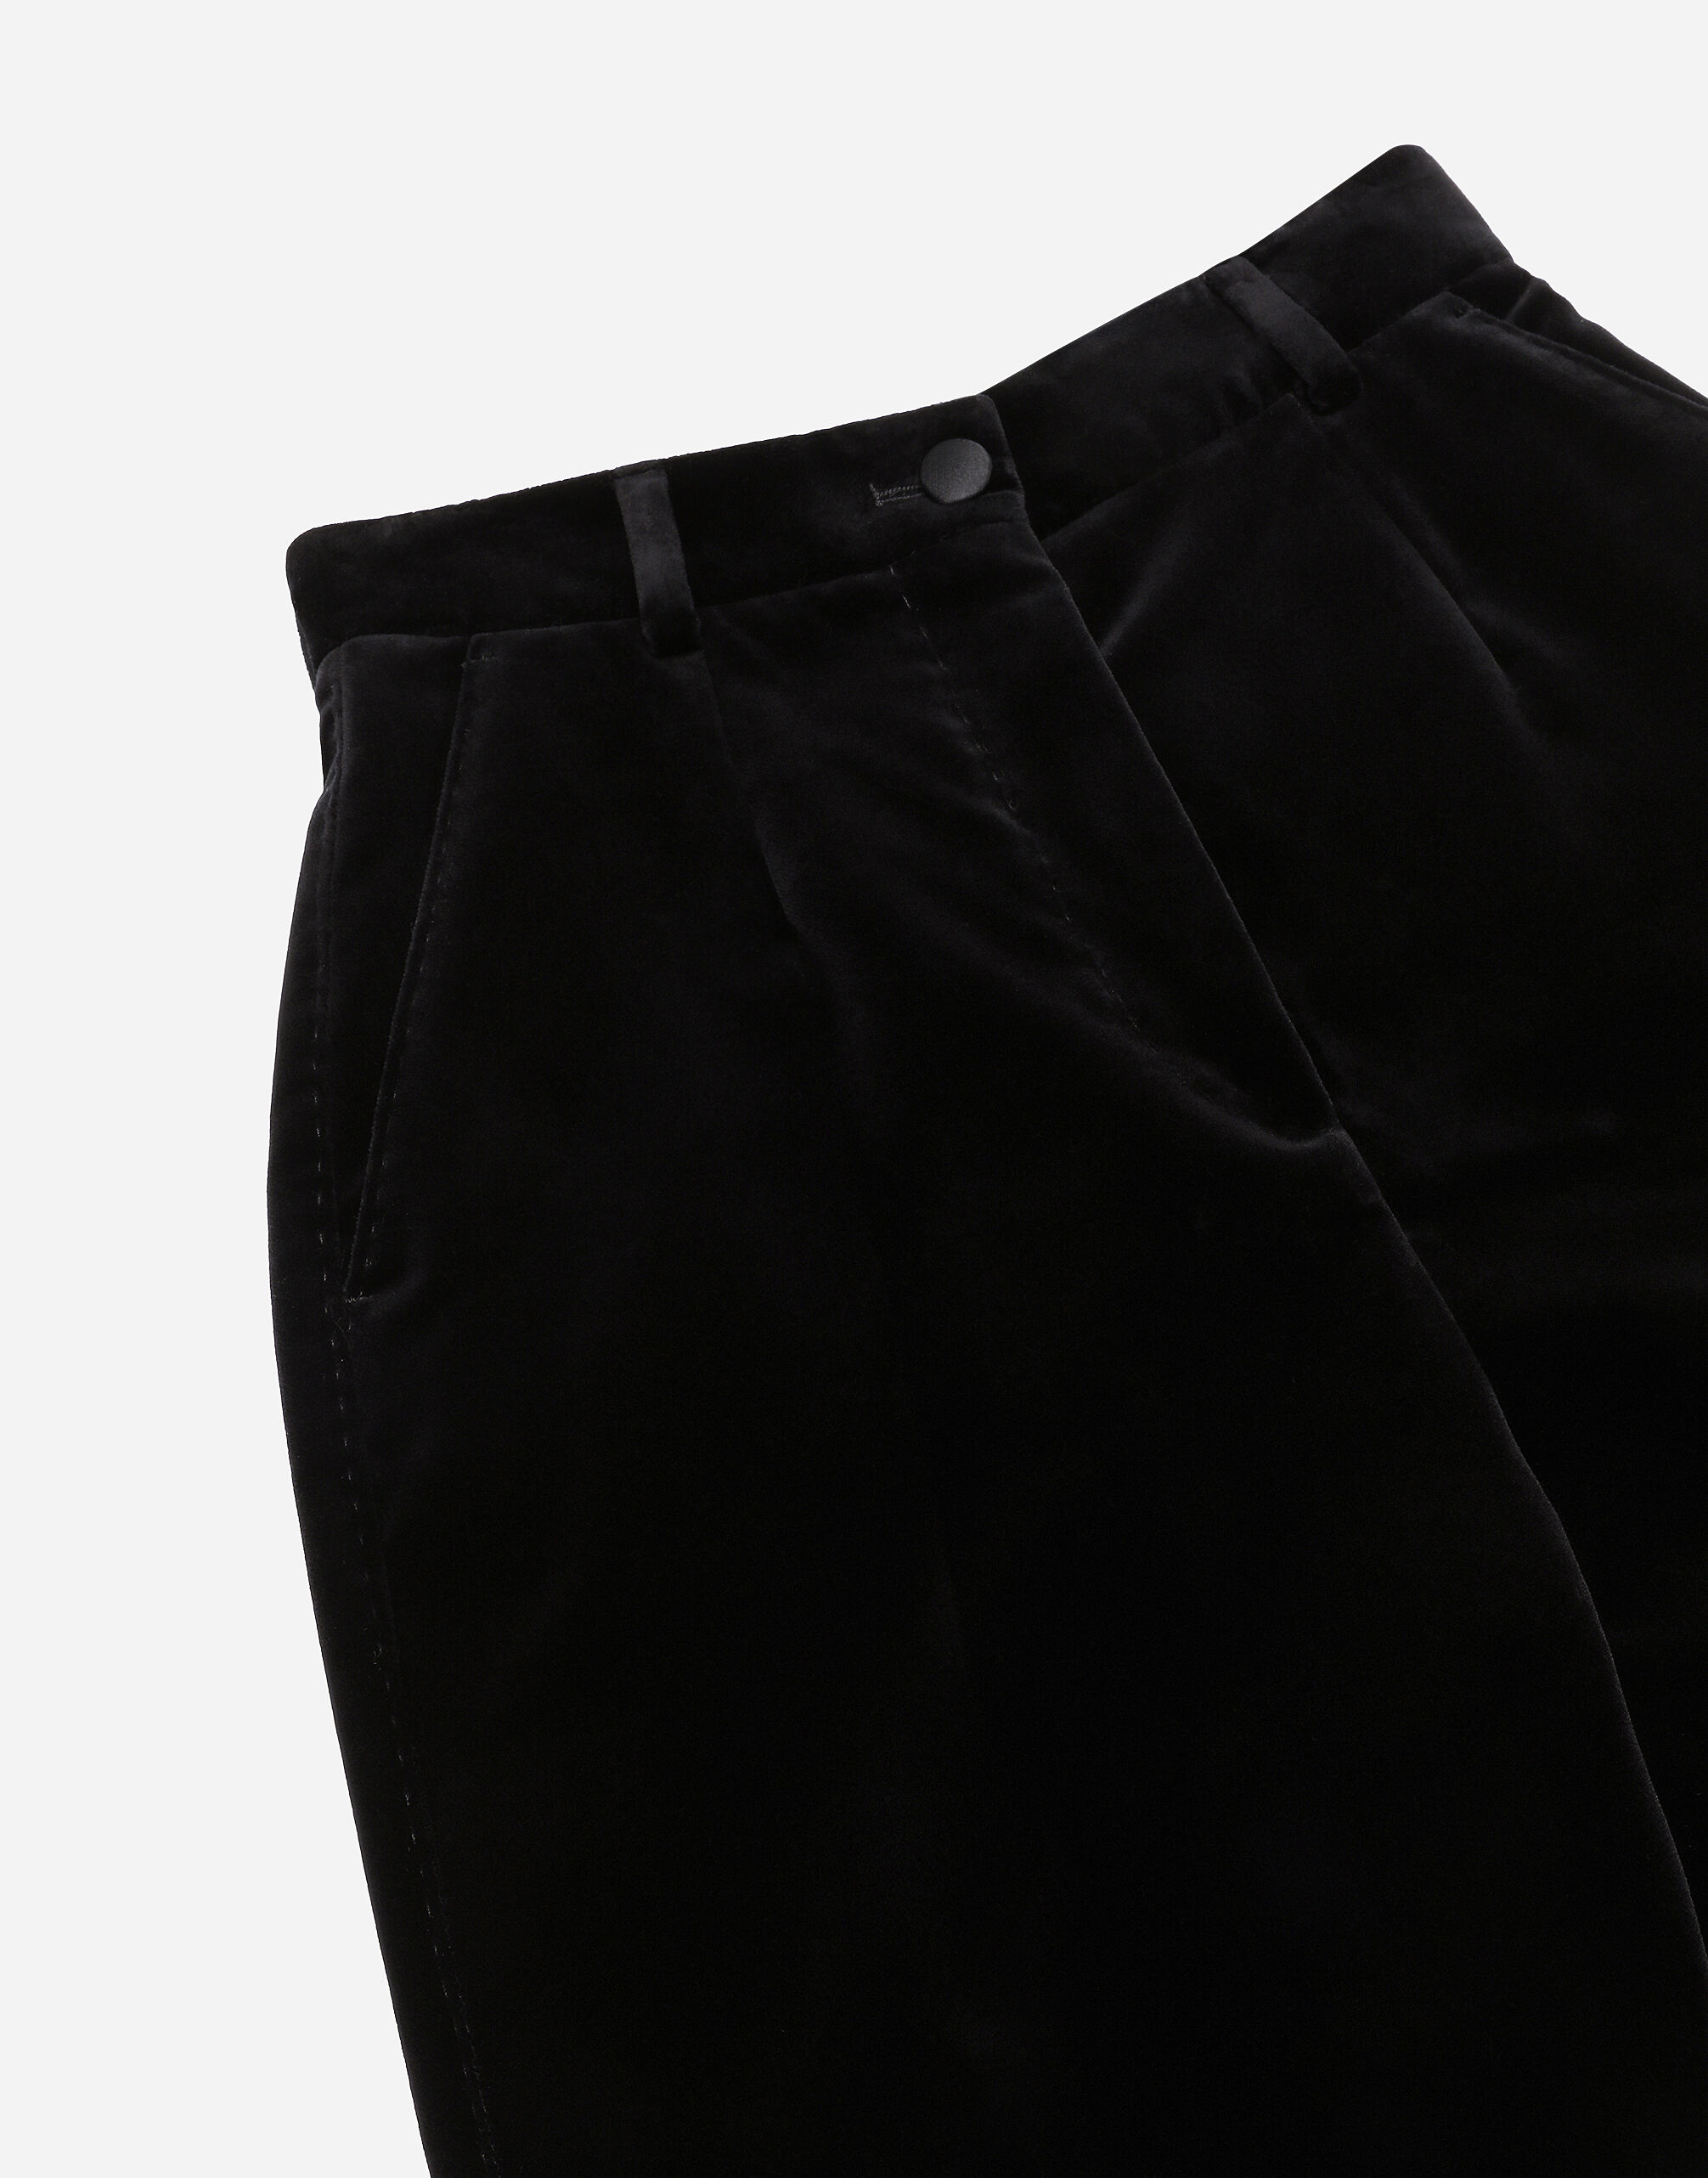 Zara Jeans Split Skinny Black Hi Rise Women's Size 4 Classic Boho Western |  eBay